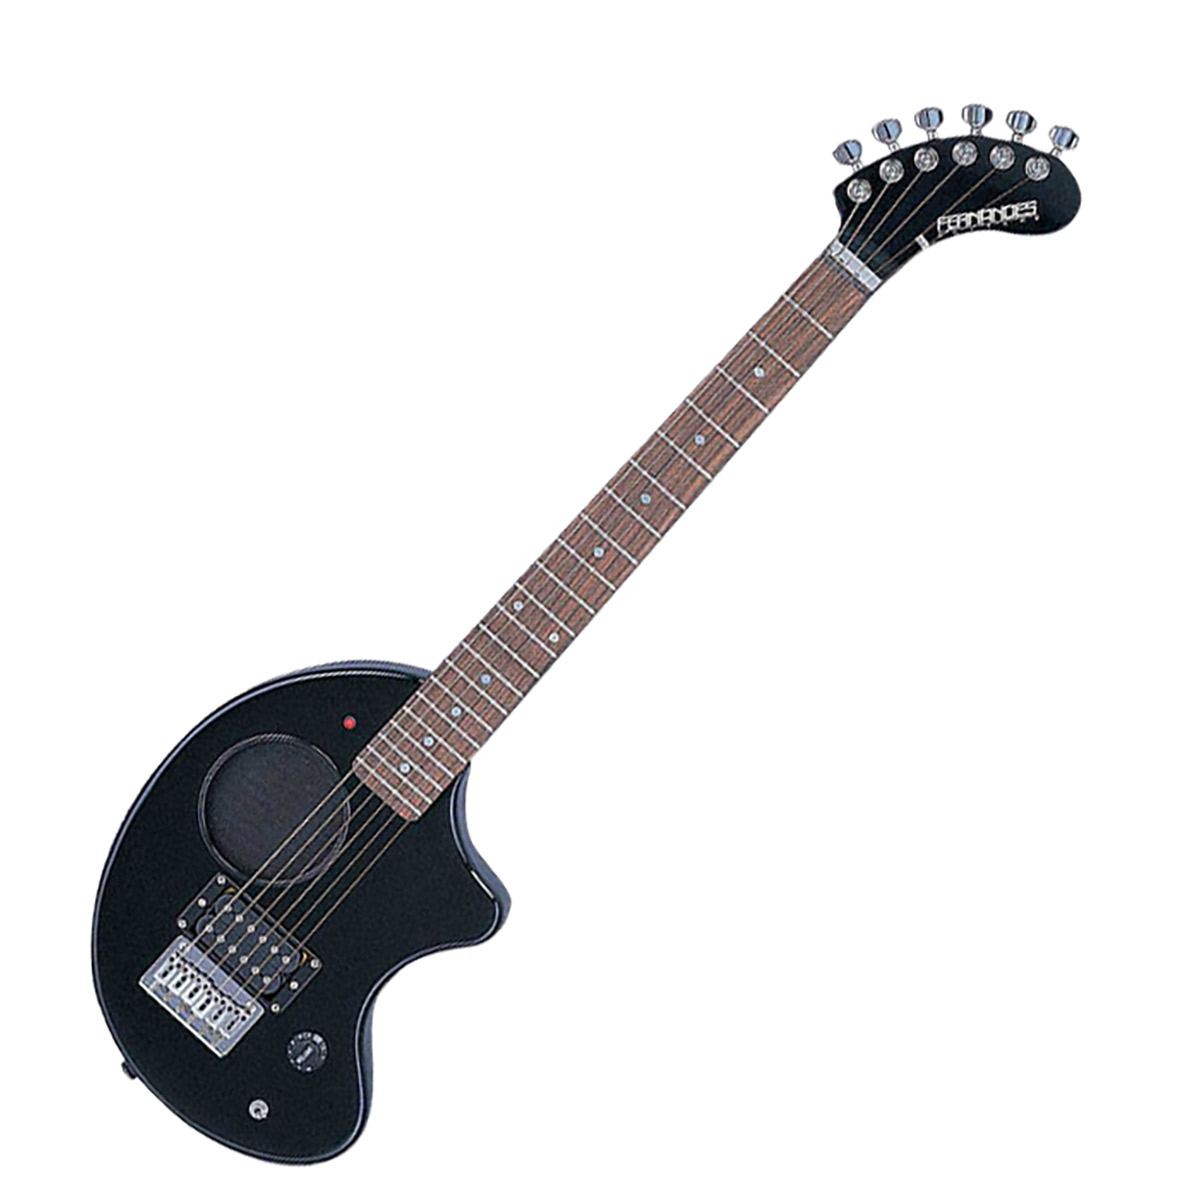 FERNANDES ZO-3 BLK スピーカー内蔵ミニエレキギター ブラック ソフトケース付き 【フェルナンデス ゾウさんギター】